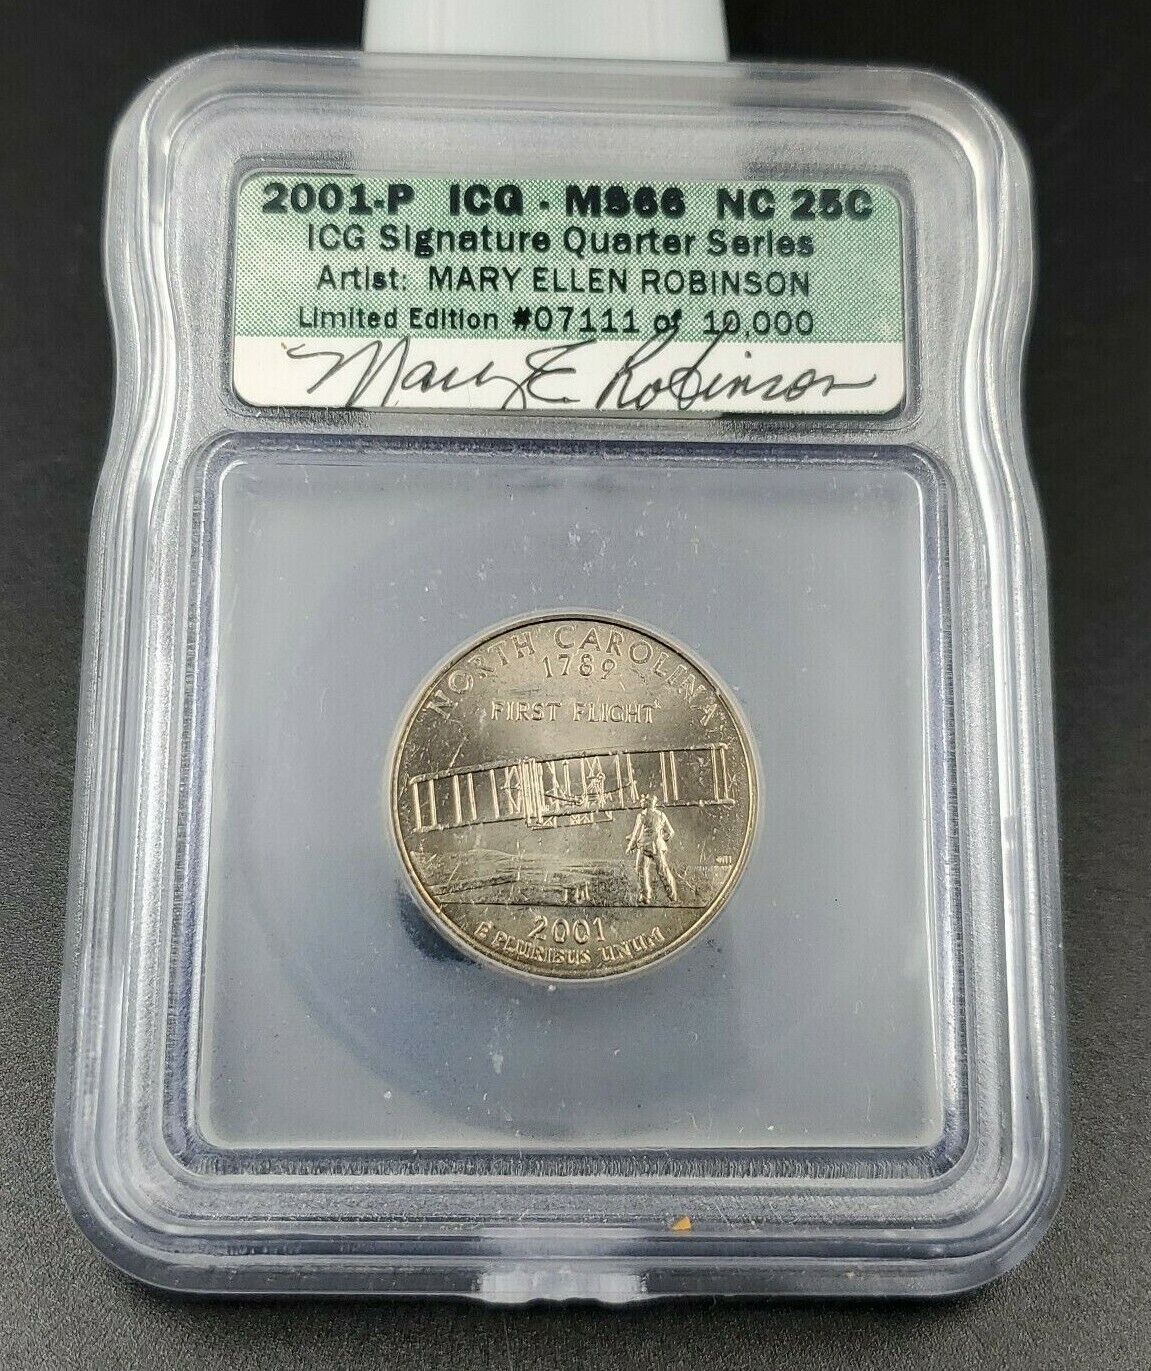 2001 P N Carolina Statehood Quarter Coin ICG Engraver Series Mary Ellen Robinson